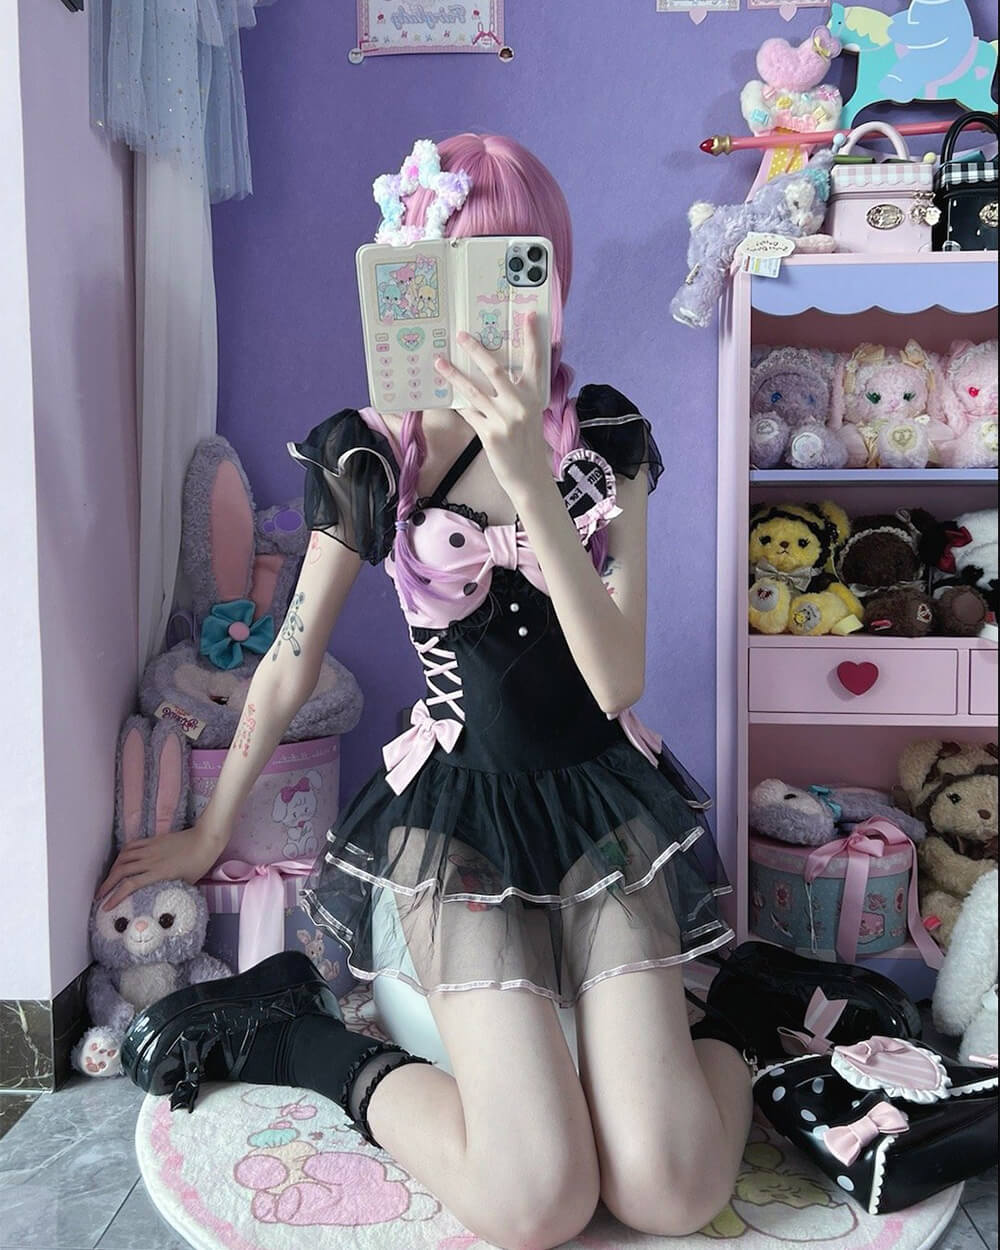 Kawaii-Polka-Dot-Bow-Black-Pink-One-Piece-Swimsuit-worn-in-girly-room